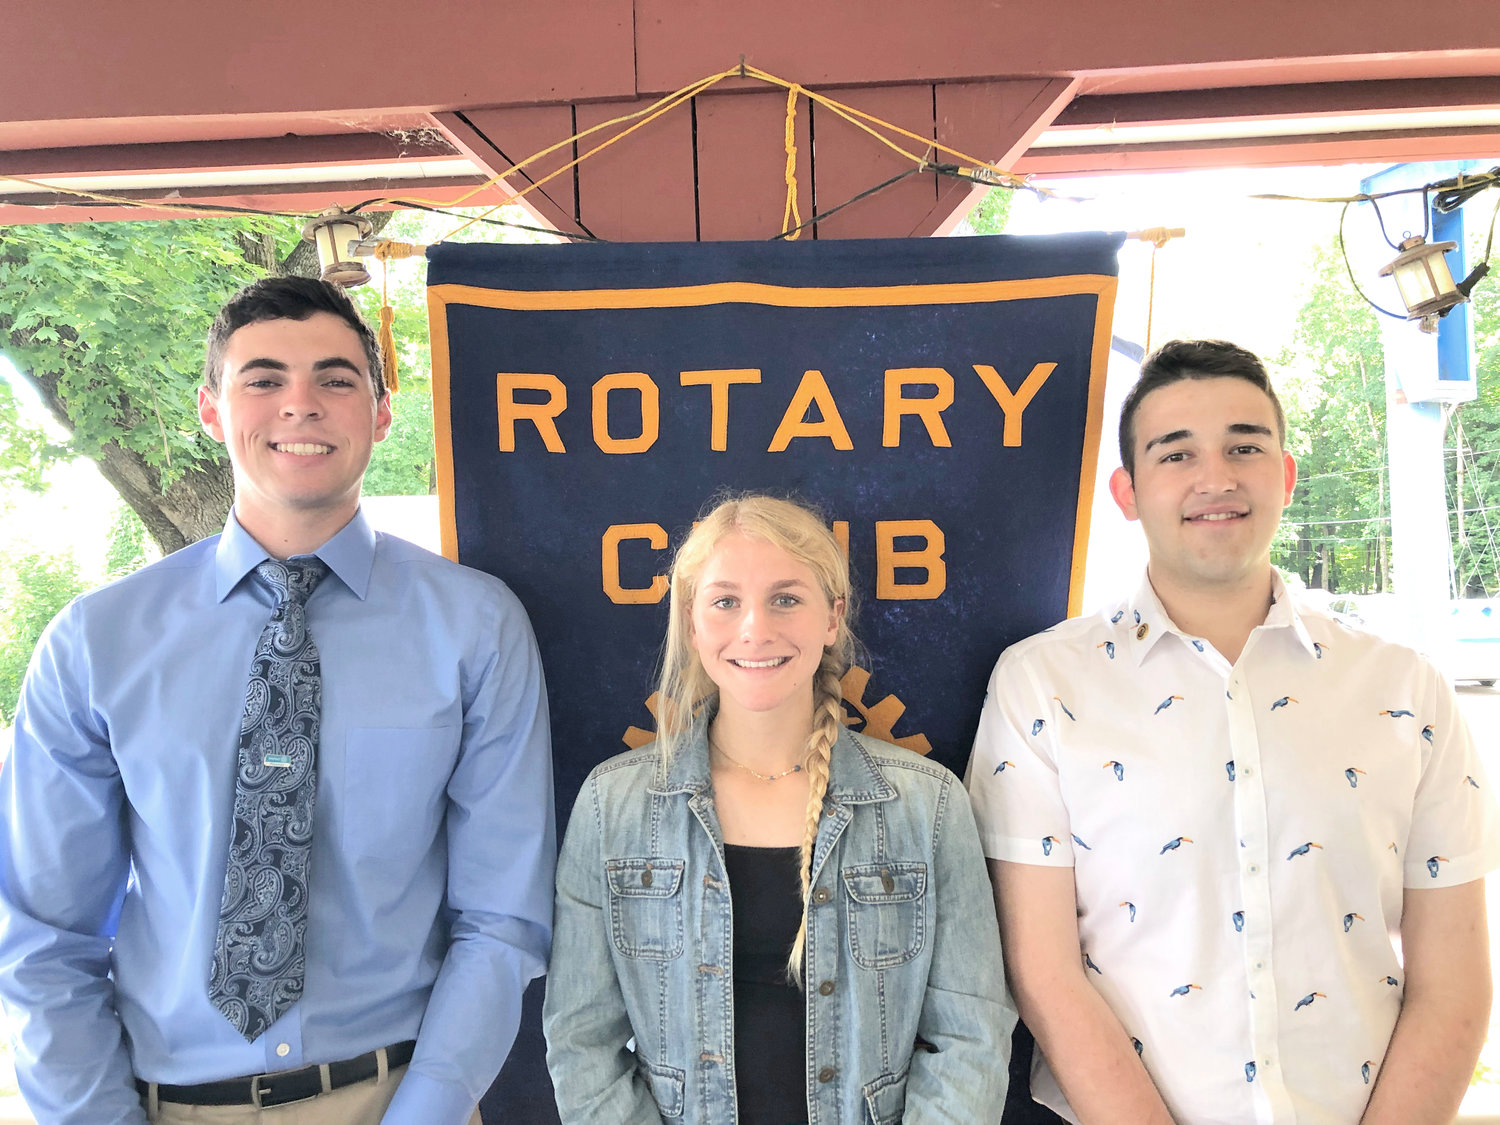 ROTARY SCHOLARS — The Rome Rotary Club has awarded scholarships to three recent Rome Free Academy graduates, from left: Joe Keeney, Lauren Dorfman and Frank Till.